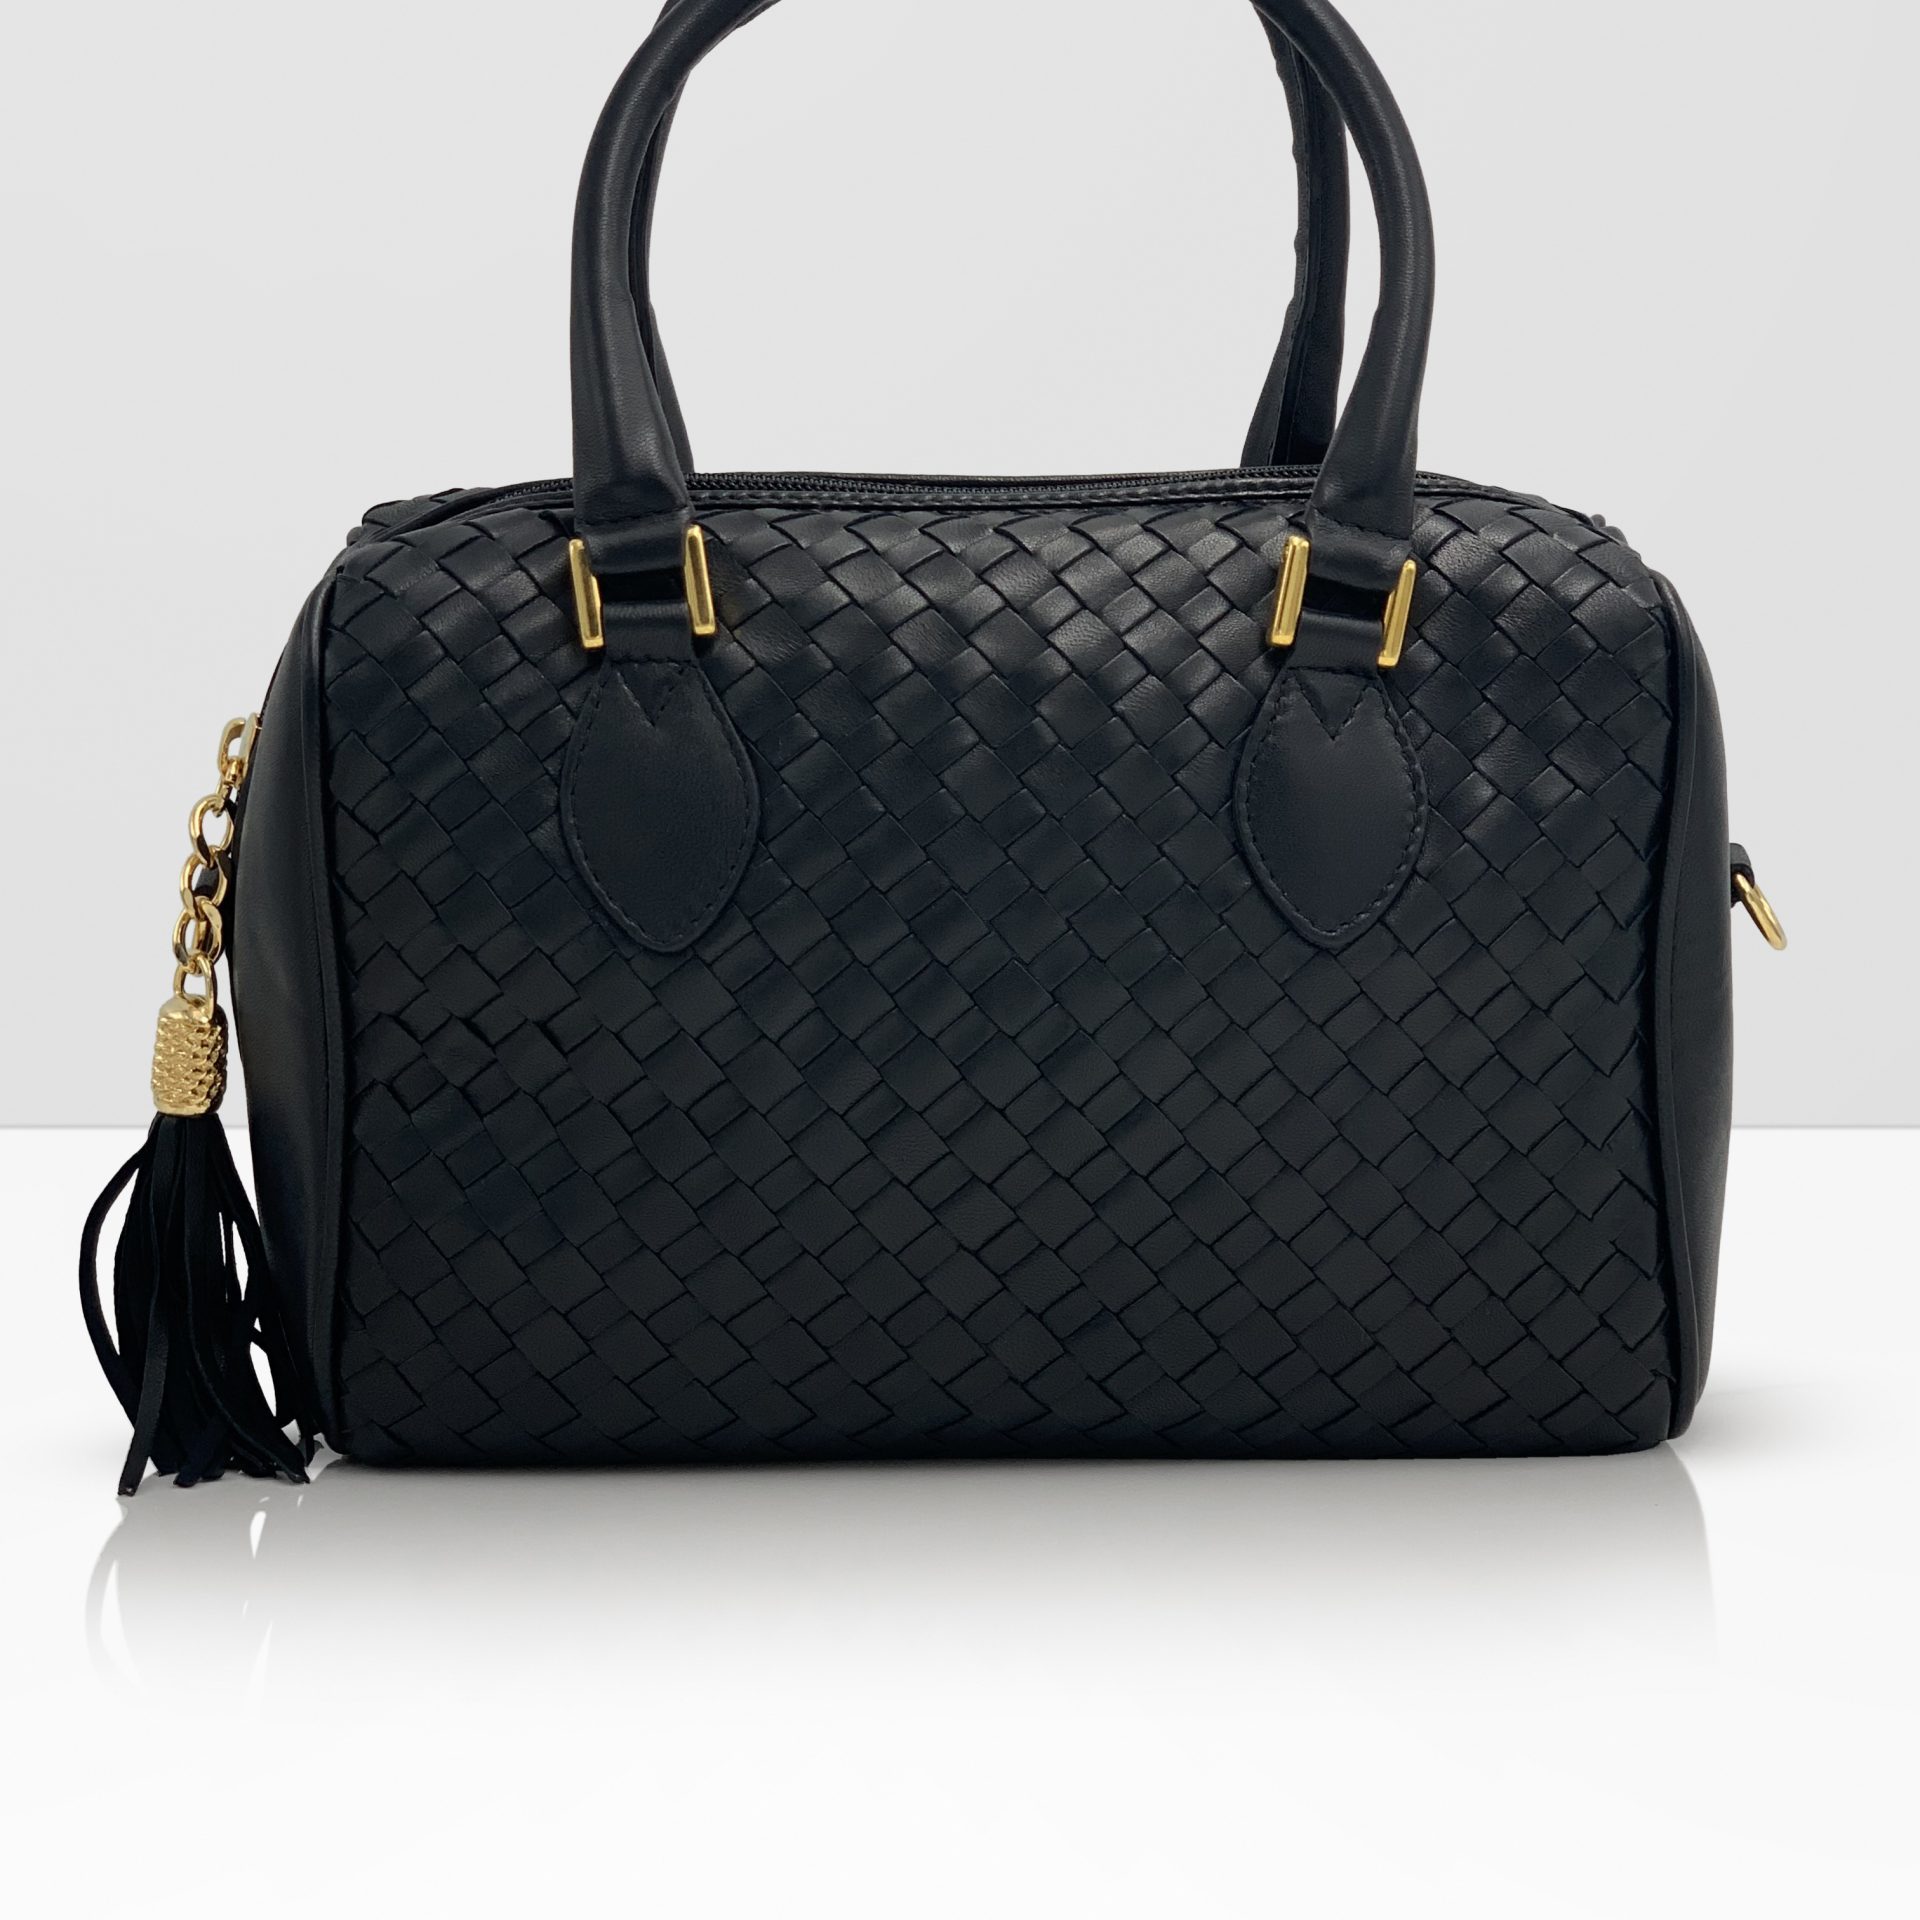 italian leather handbags designers, designer handbags made in italy